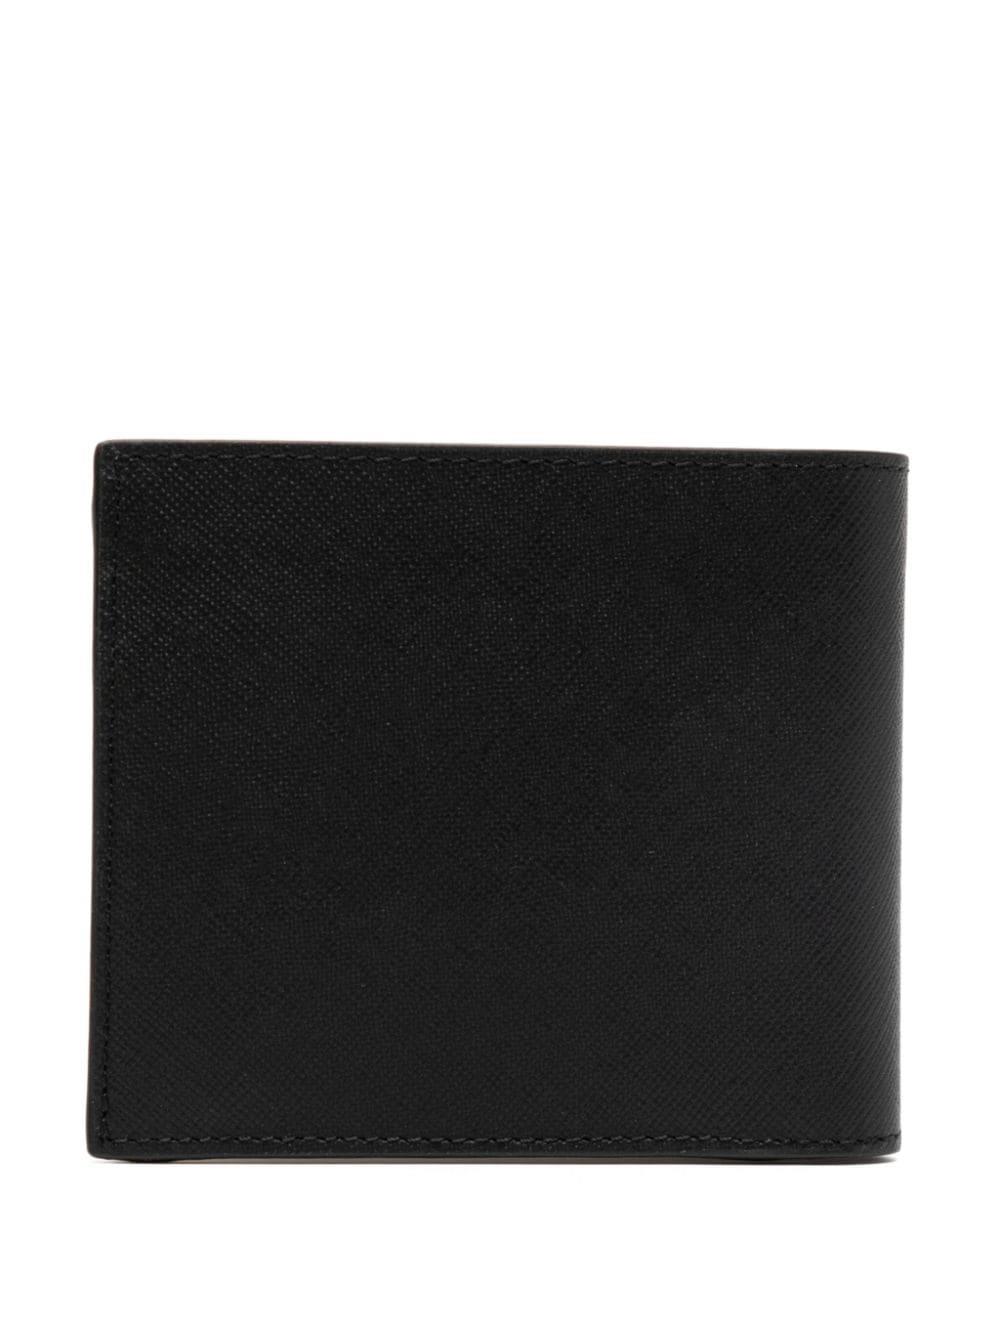 Paul Smith Signature Stripe Balloon leather wallet - Black